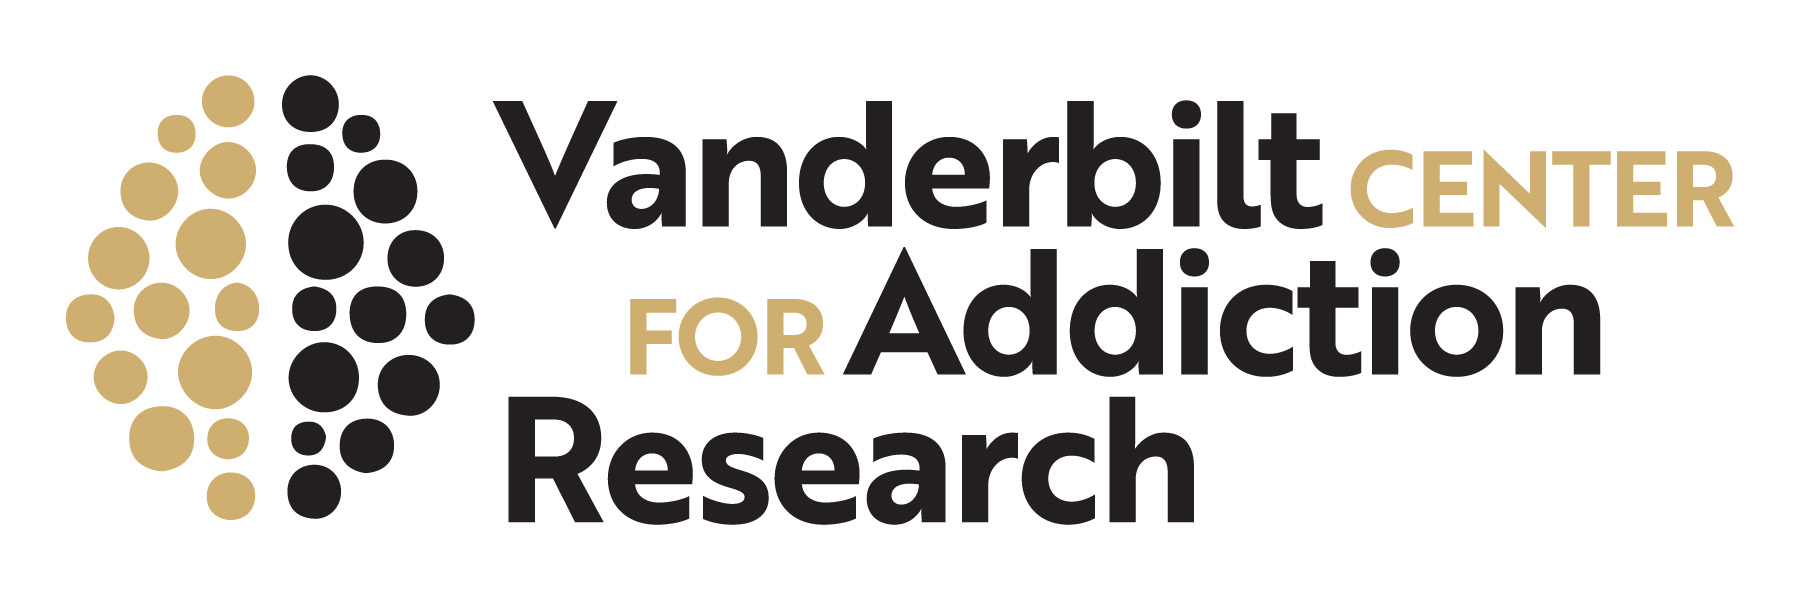 logo saying Vanderbilt Center for Addiction Research